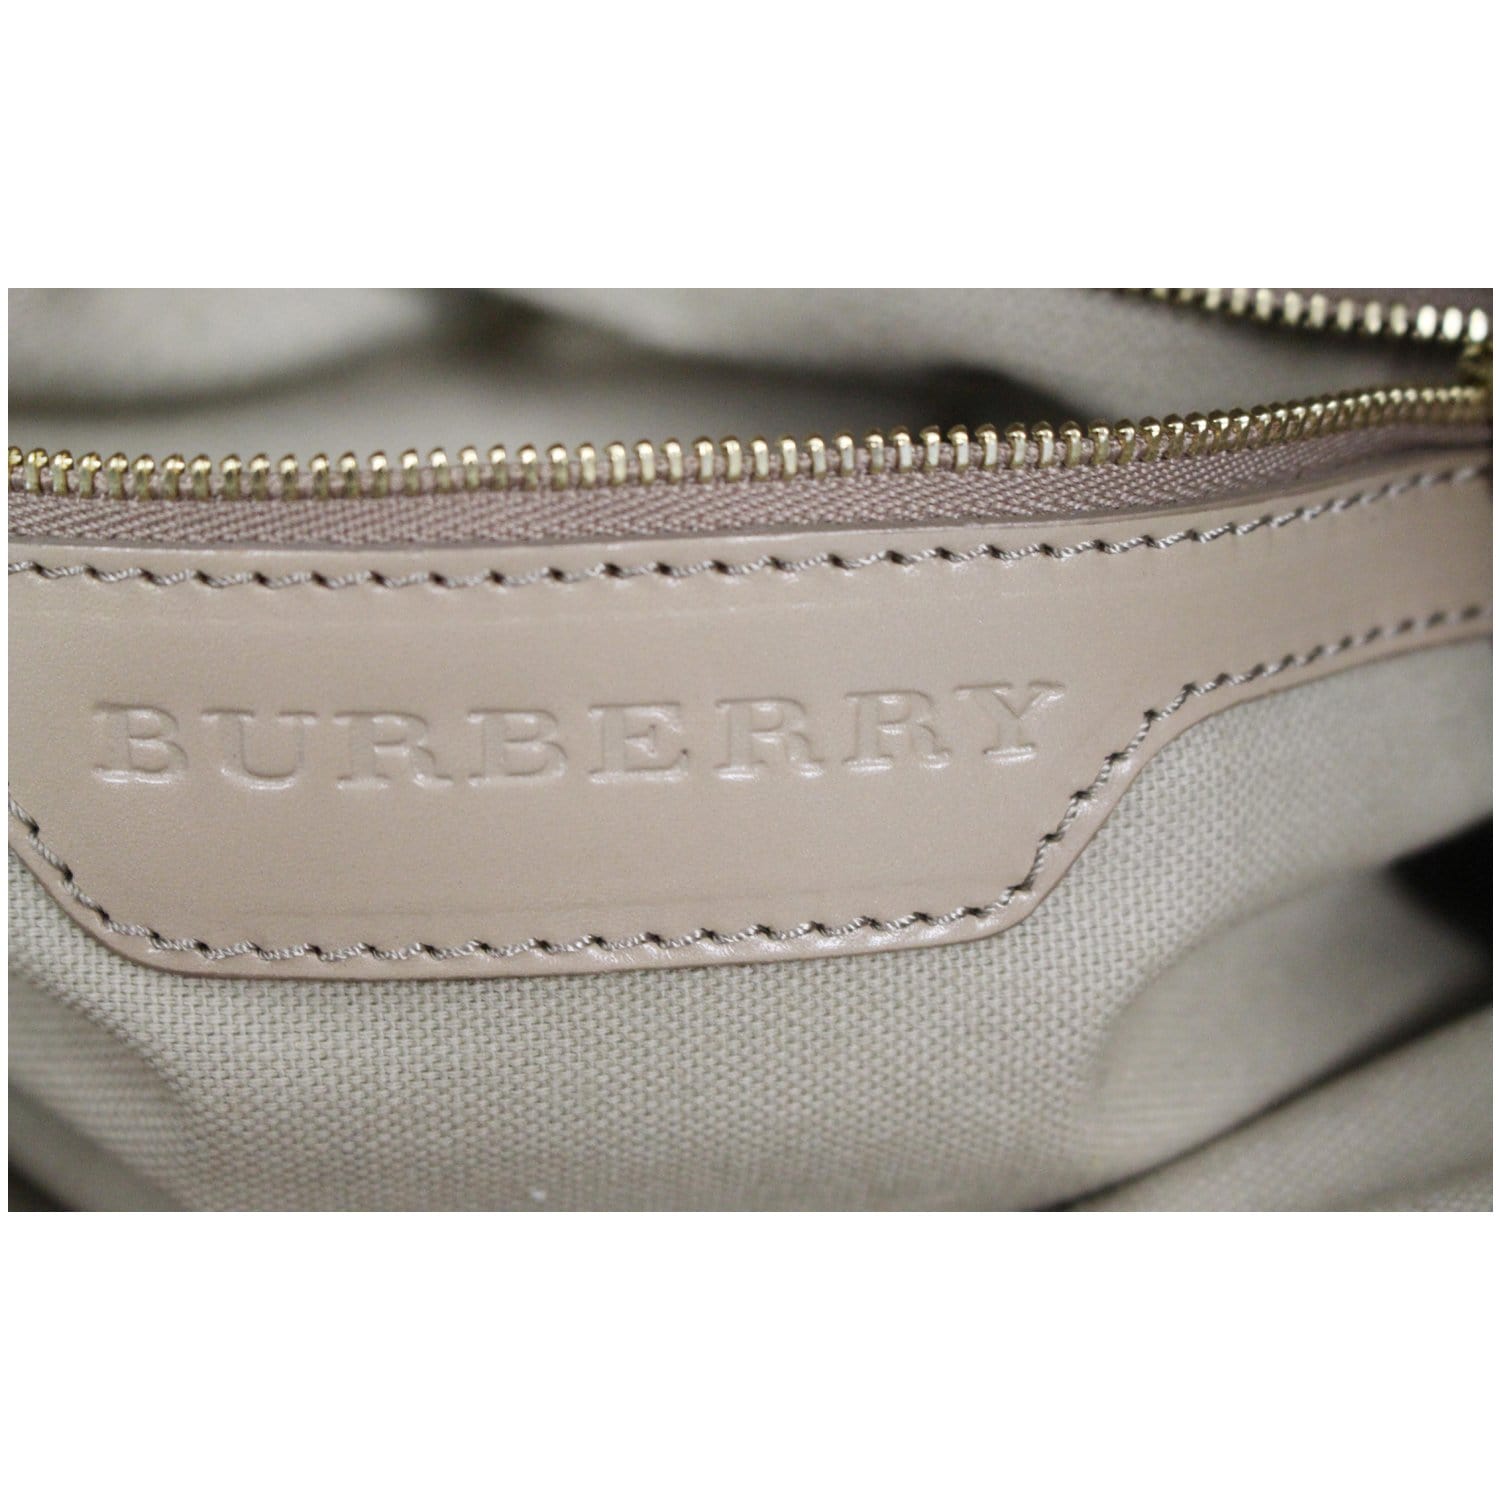 Burberry Baby Bridle Bag Shop, SAVE 55% 